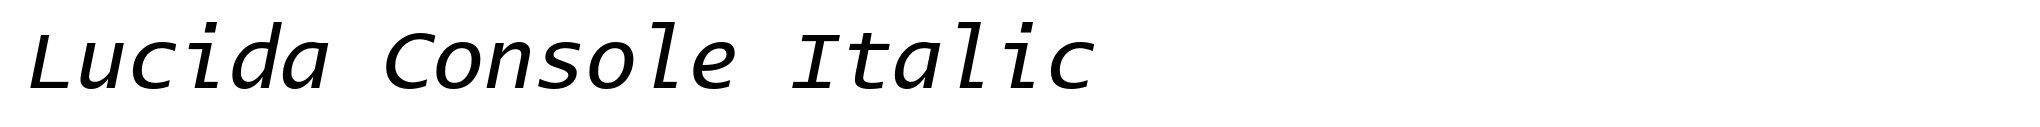 Lucida Console Italic image